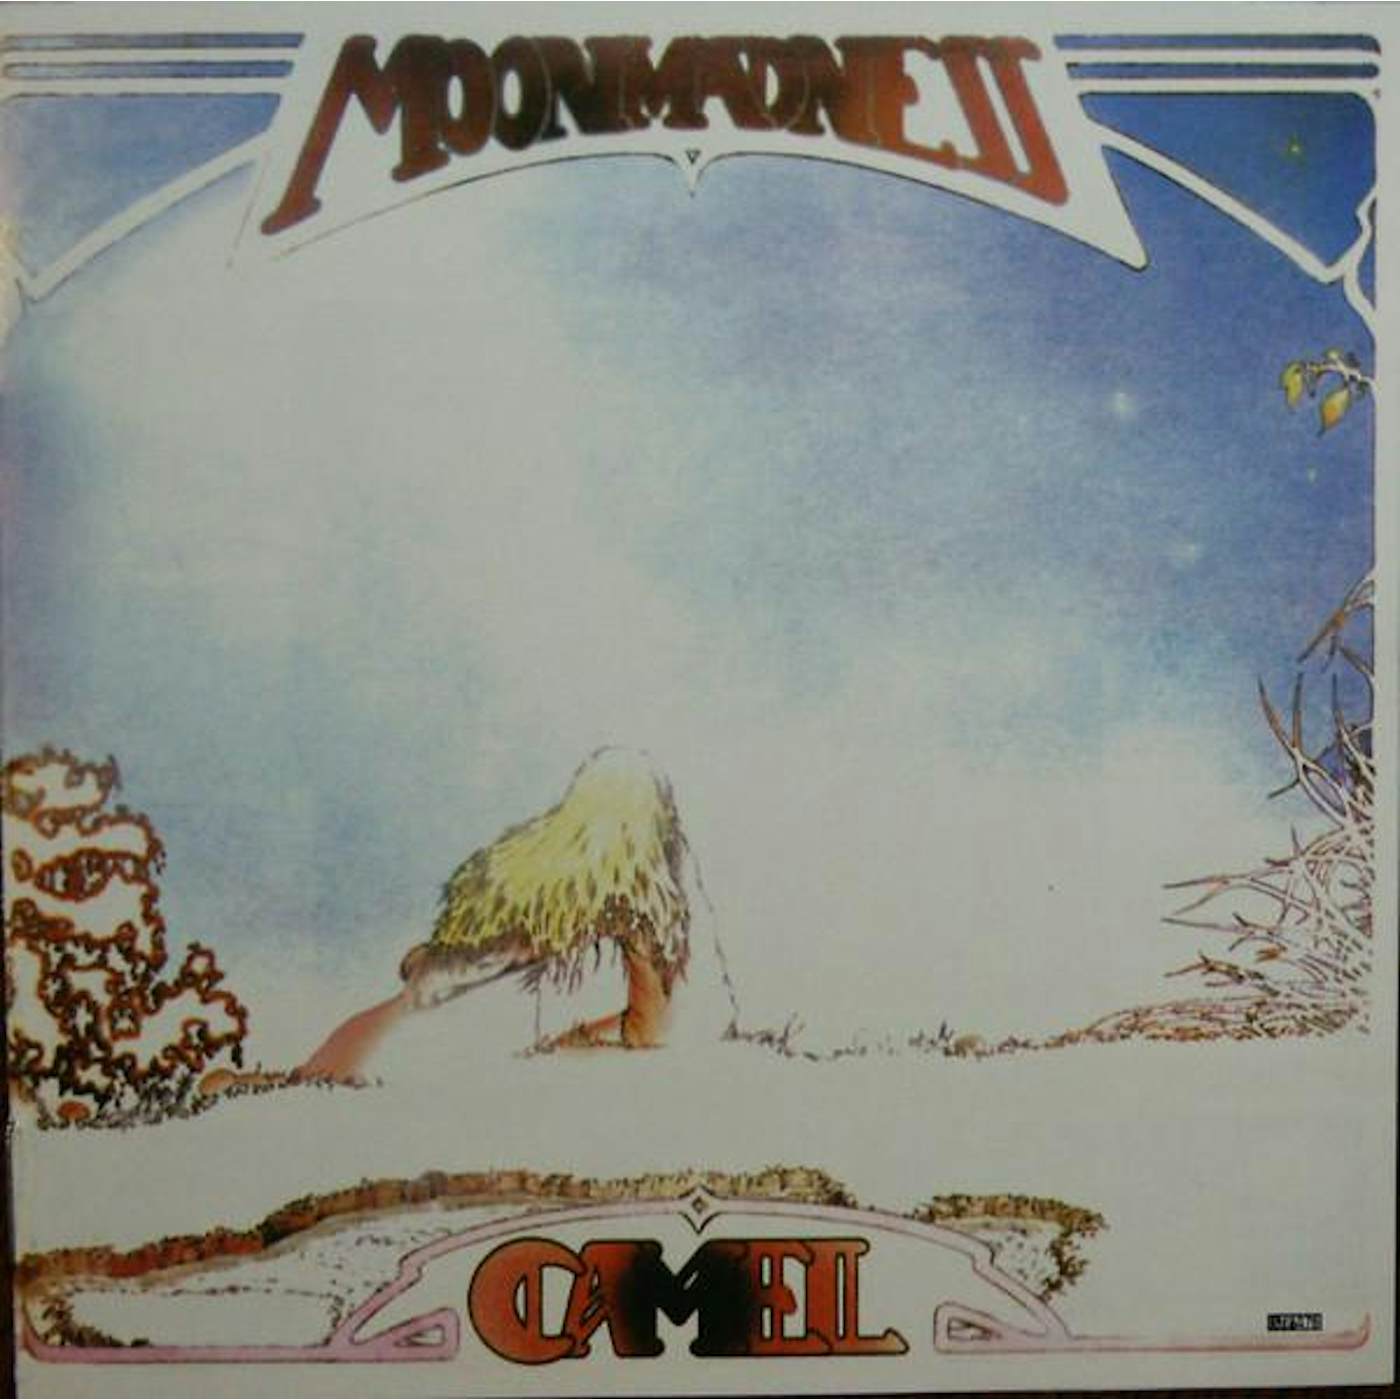 Camel MOONMADNESS CD